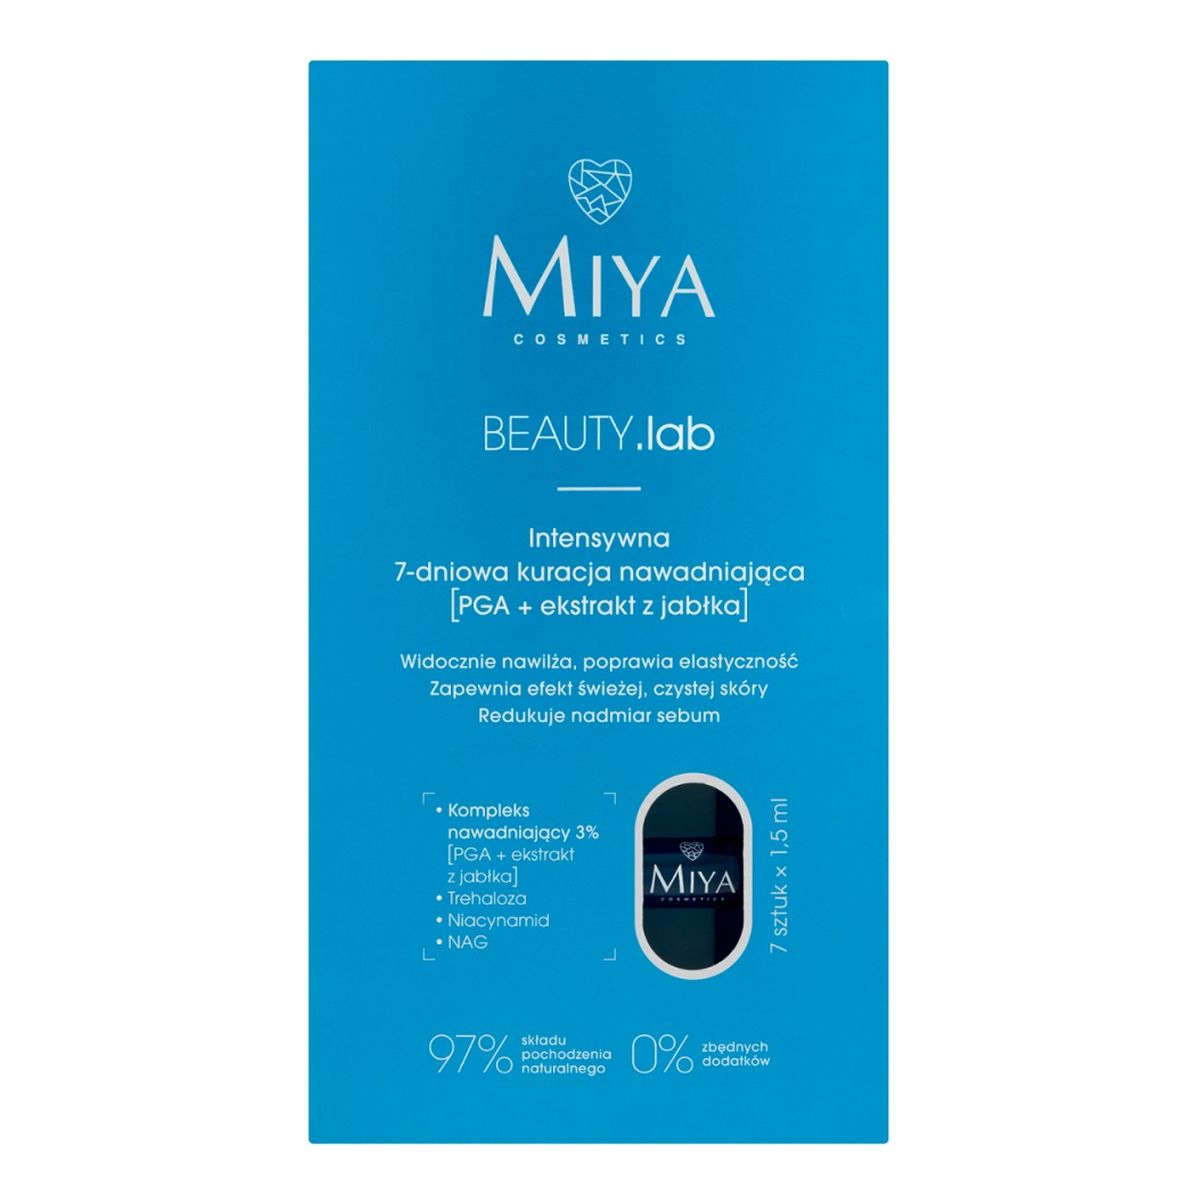 Miya Cosmetics Beauty.lab intensywna 7-dniowa kuracja nawadniająca &lsqb;pga + ekstrakt z jabłka&rsqb; 7x1.